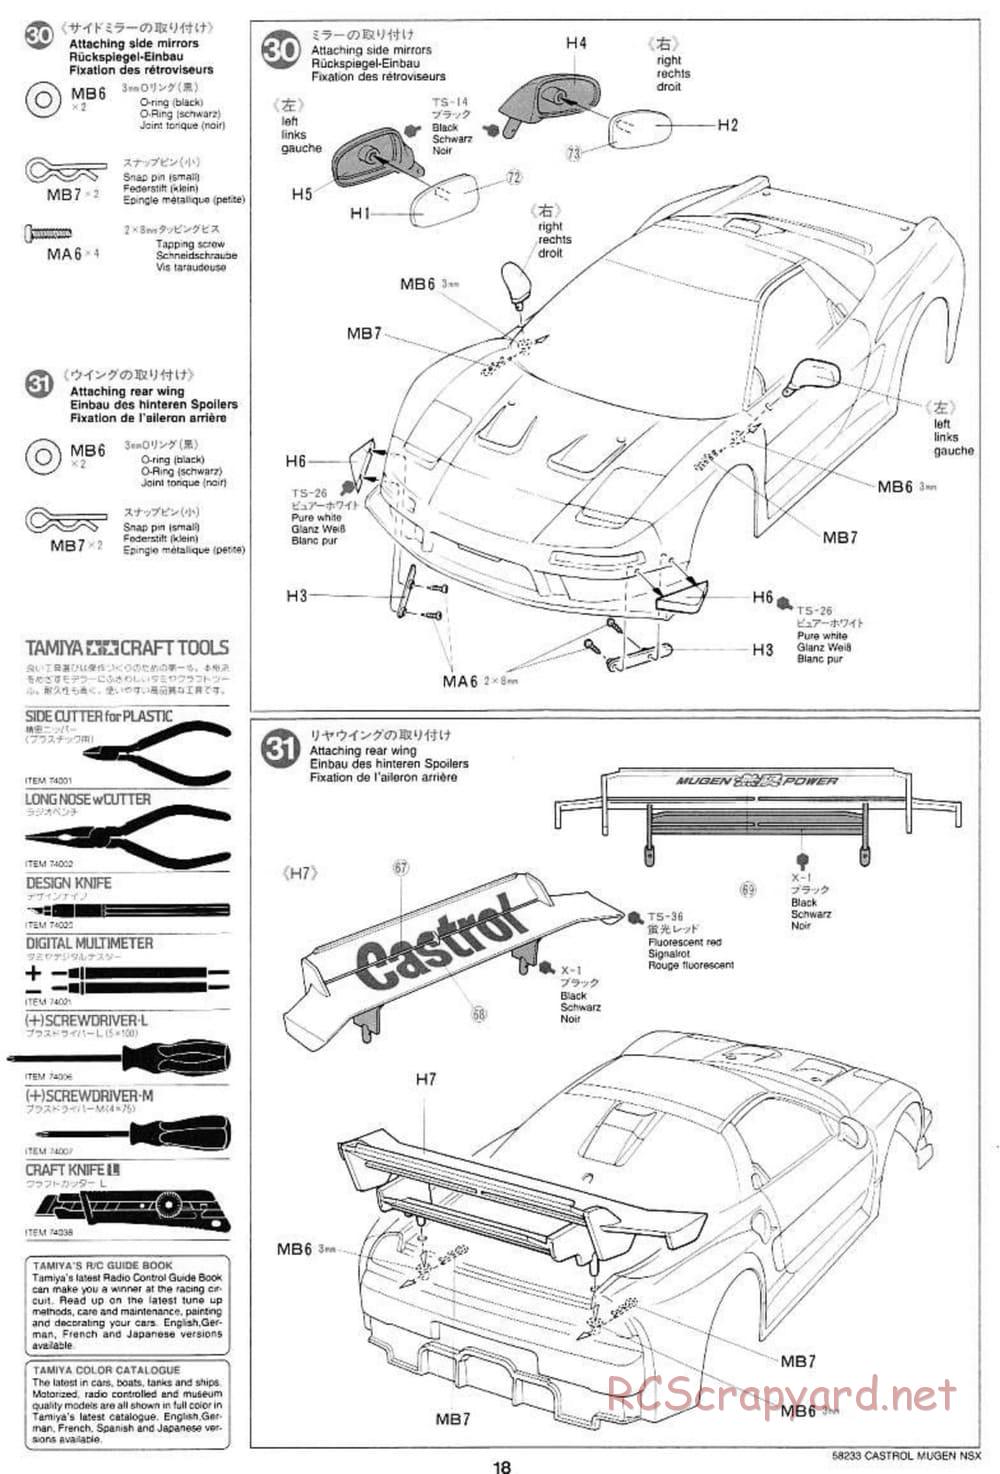 Tamiya - Castrol Mugen NSX - TL-01 Chassis - Manual - Page 18